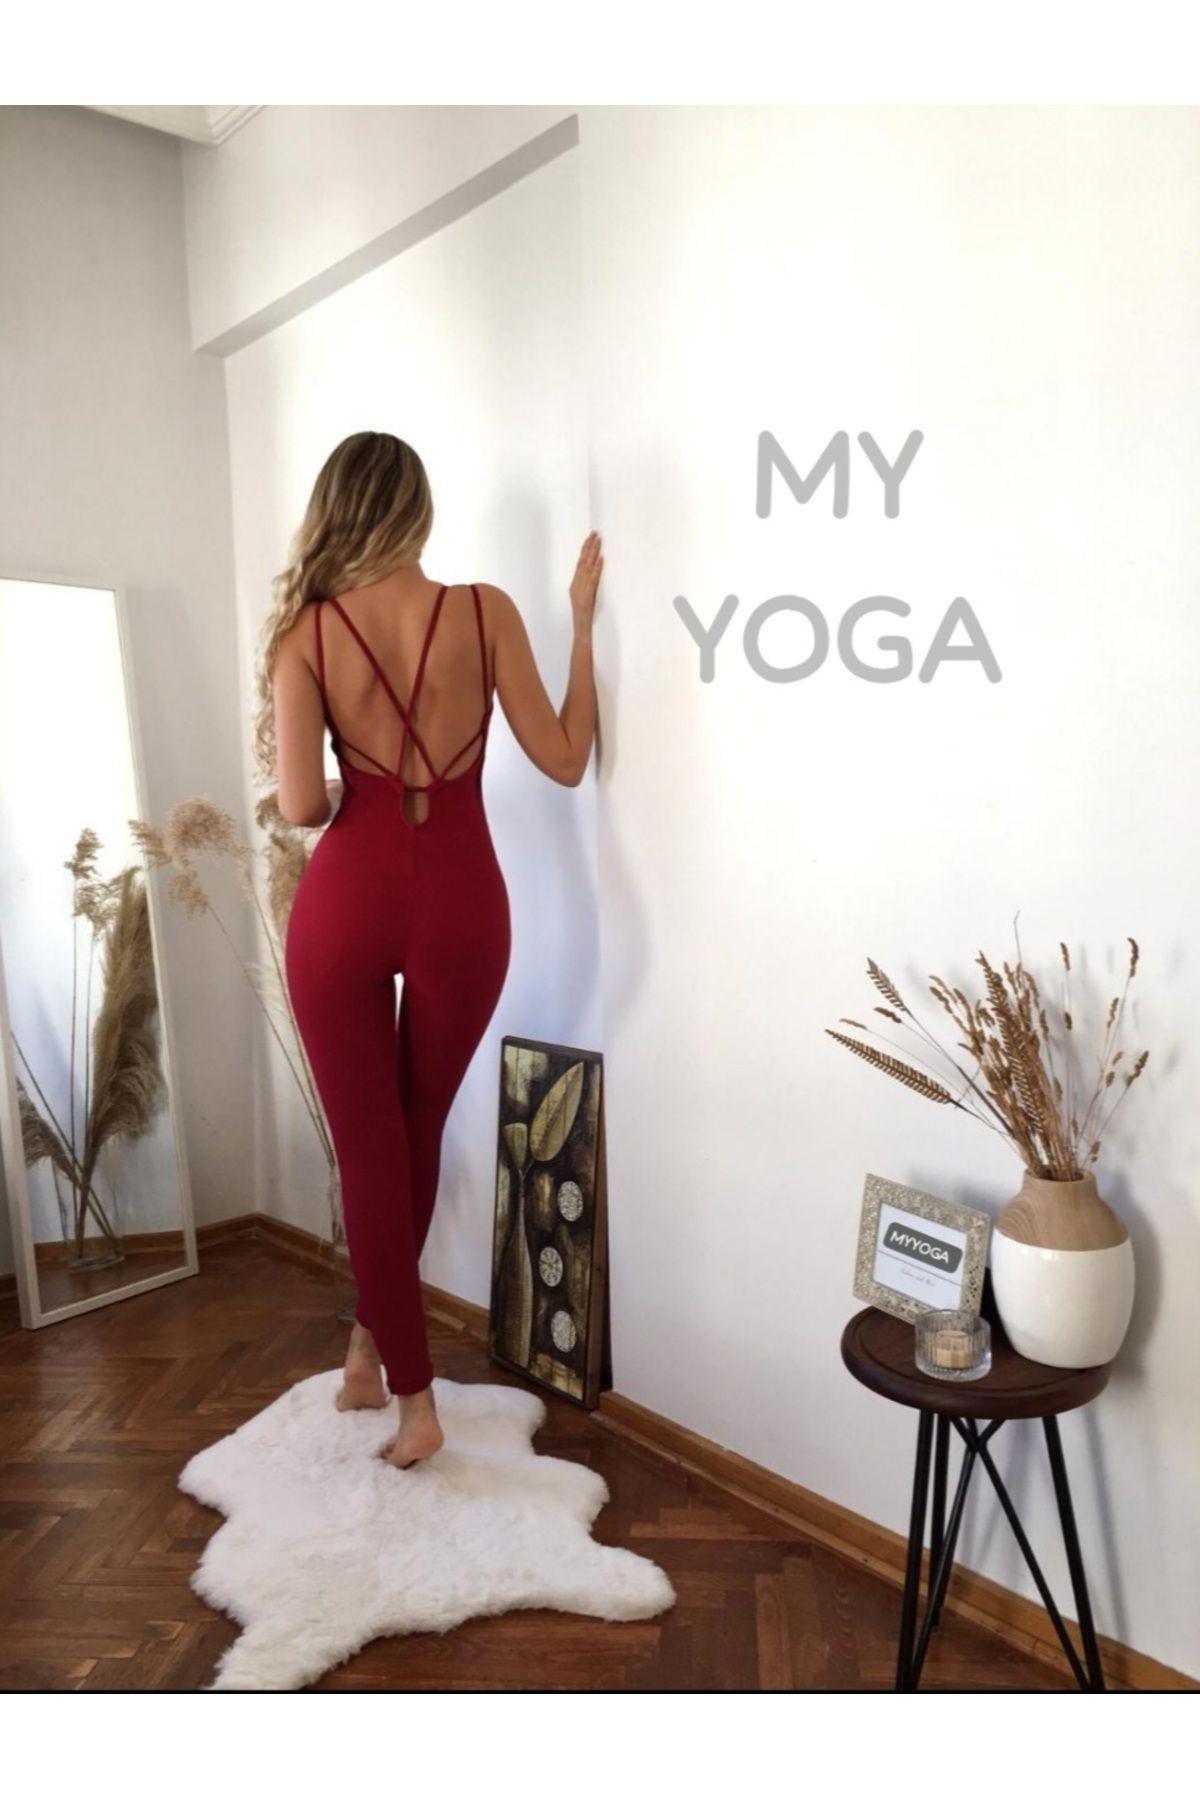 MYYOGA cros yoga pilates tulum